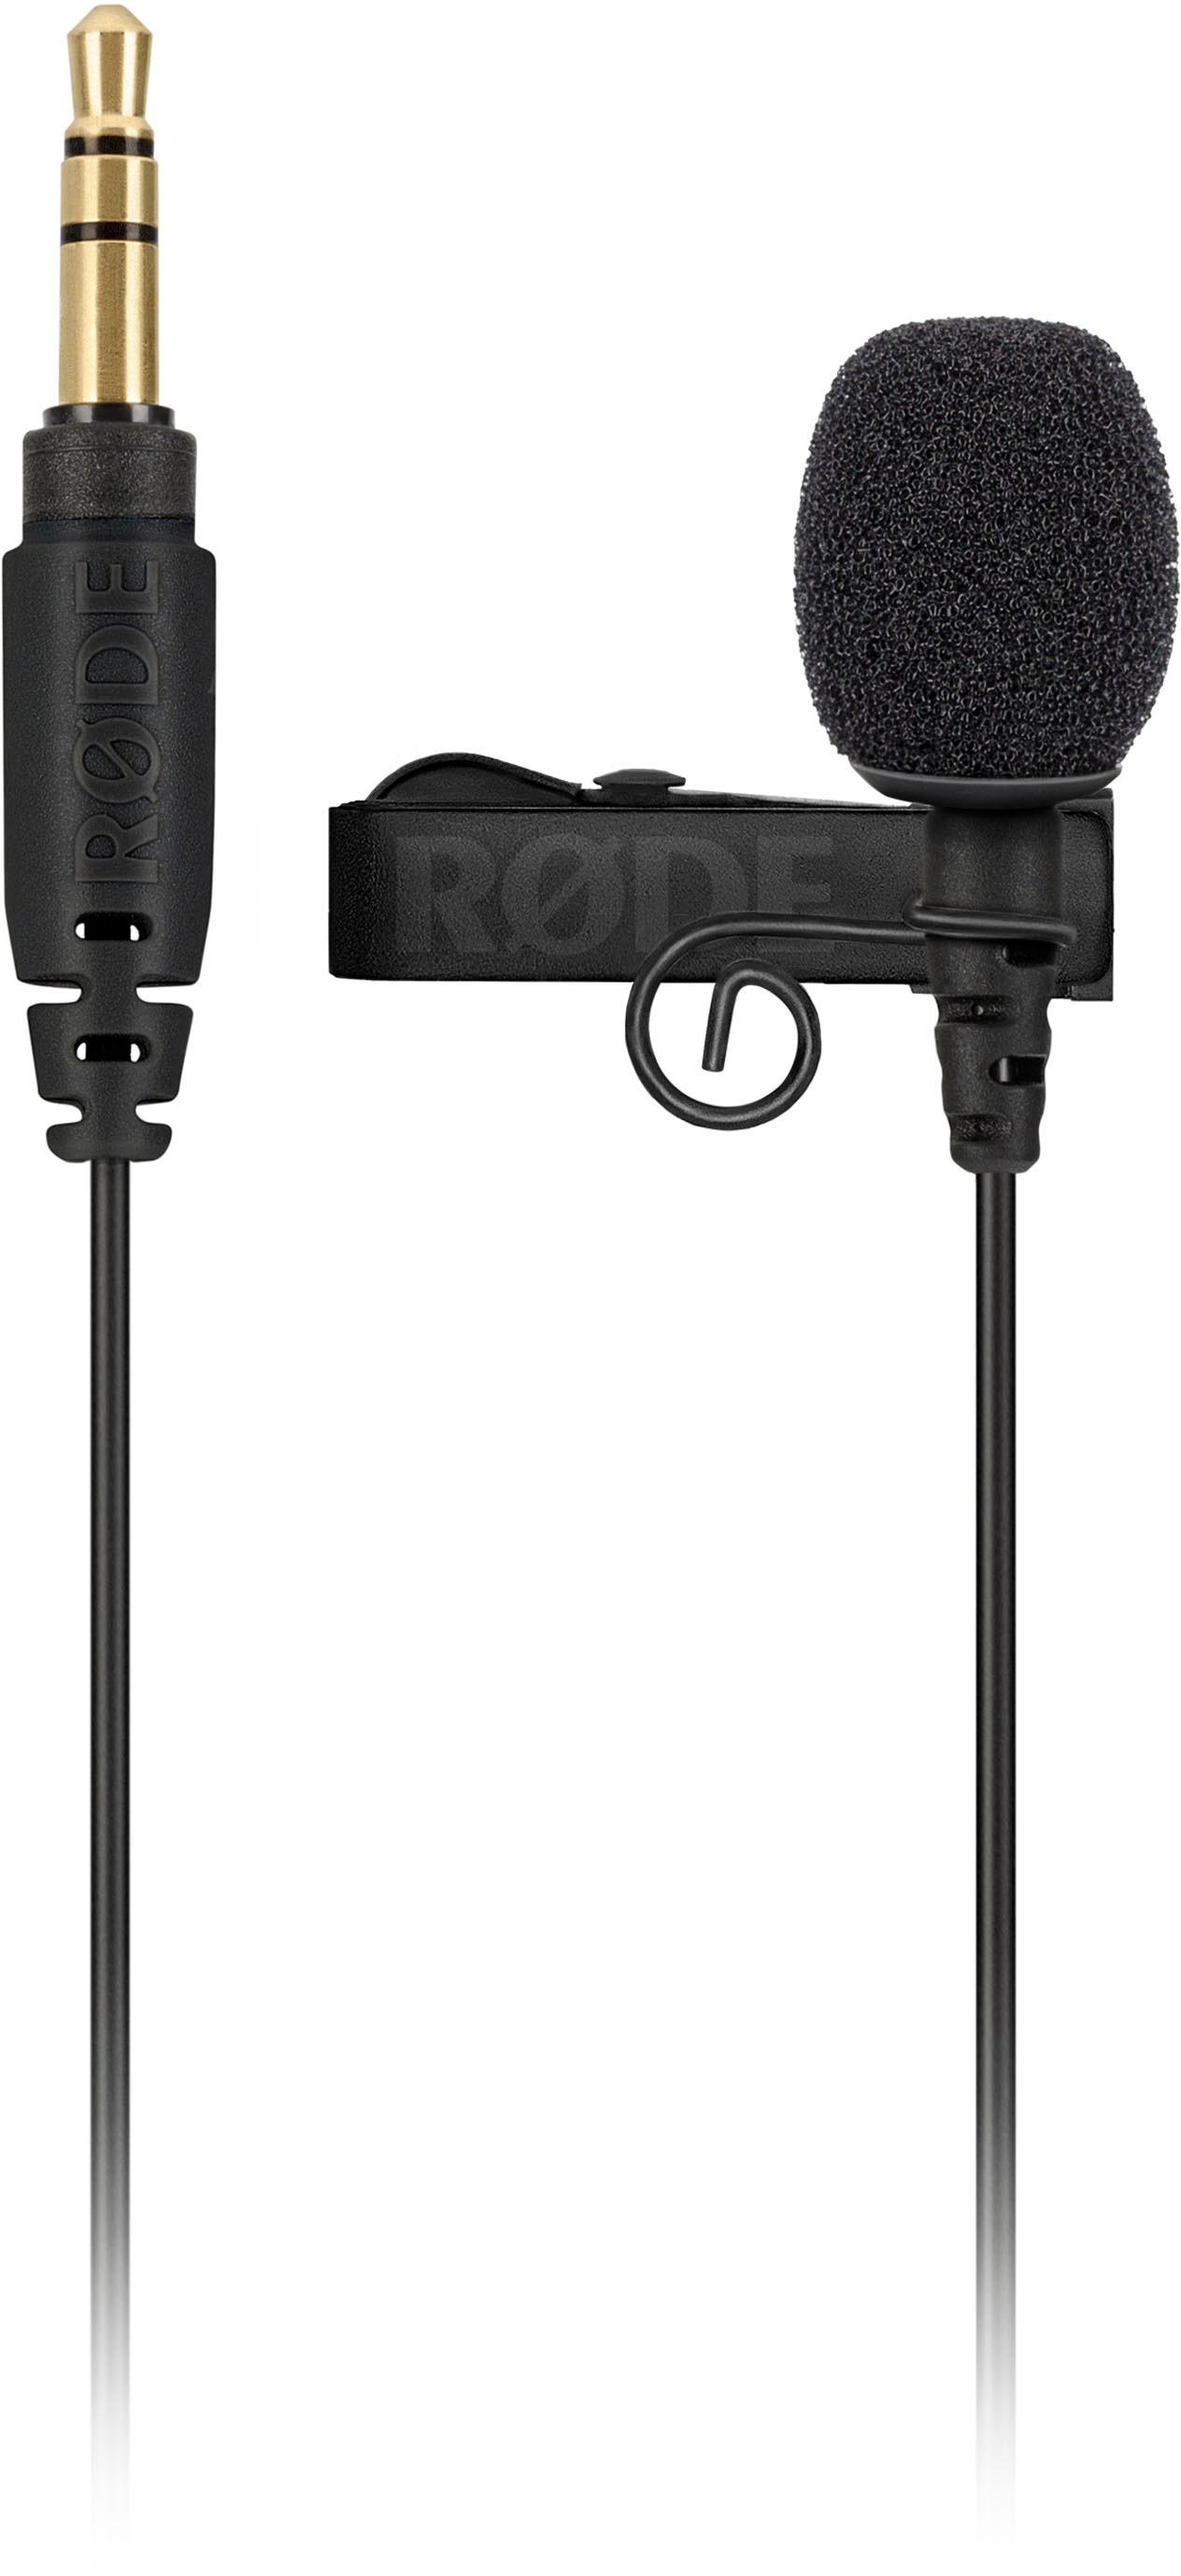 Microphone Lavalier Rode smartLav+ - Micro Smartphone 3.5mm TRRS